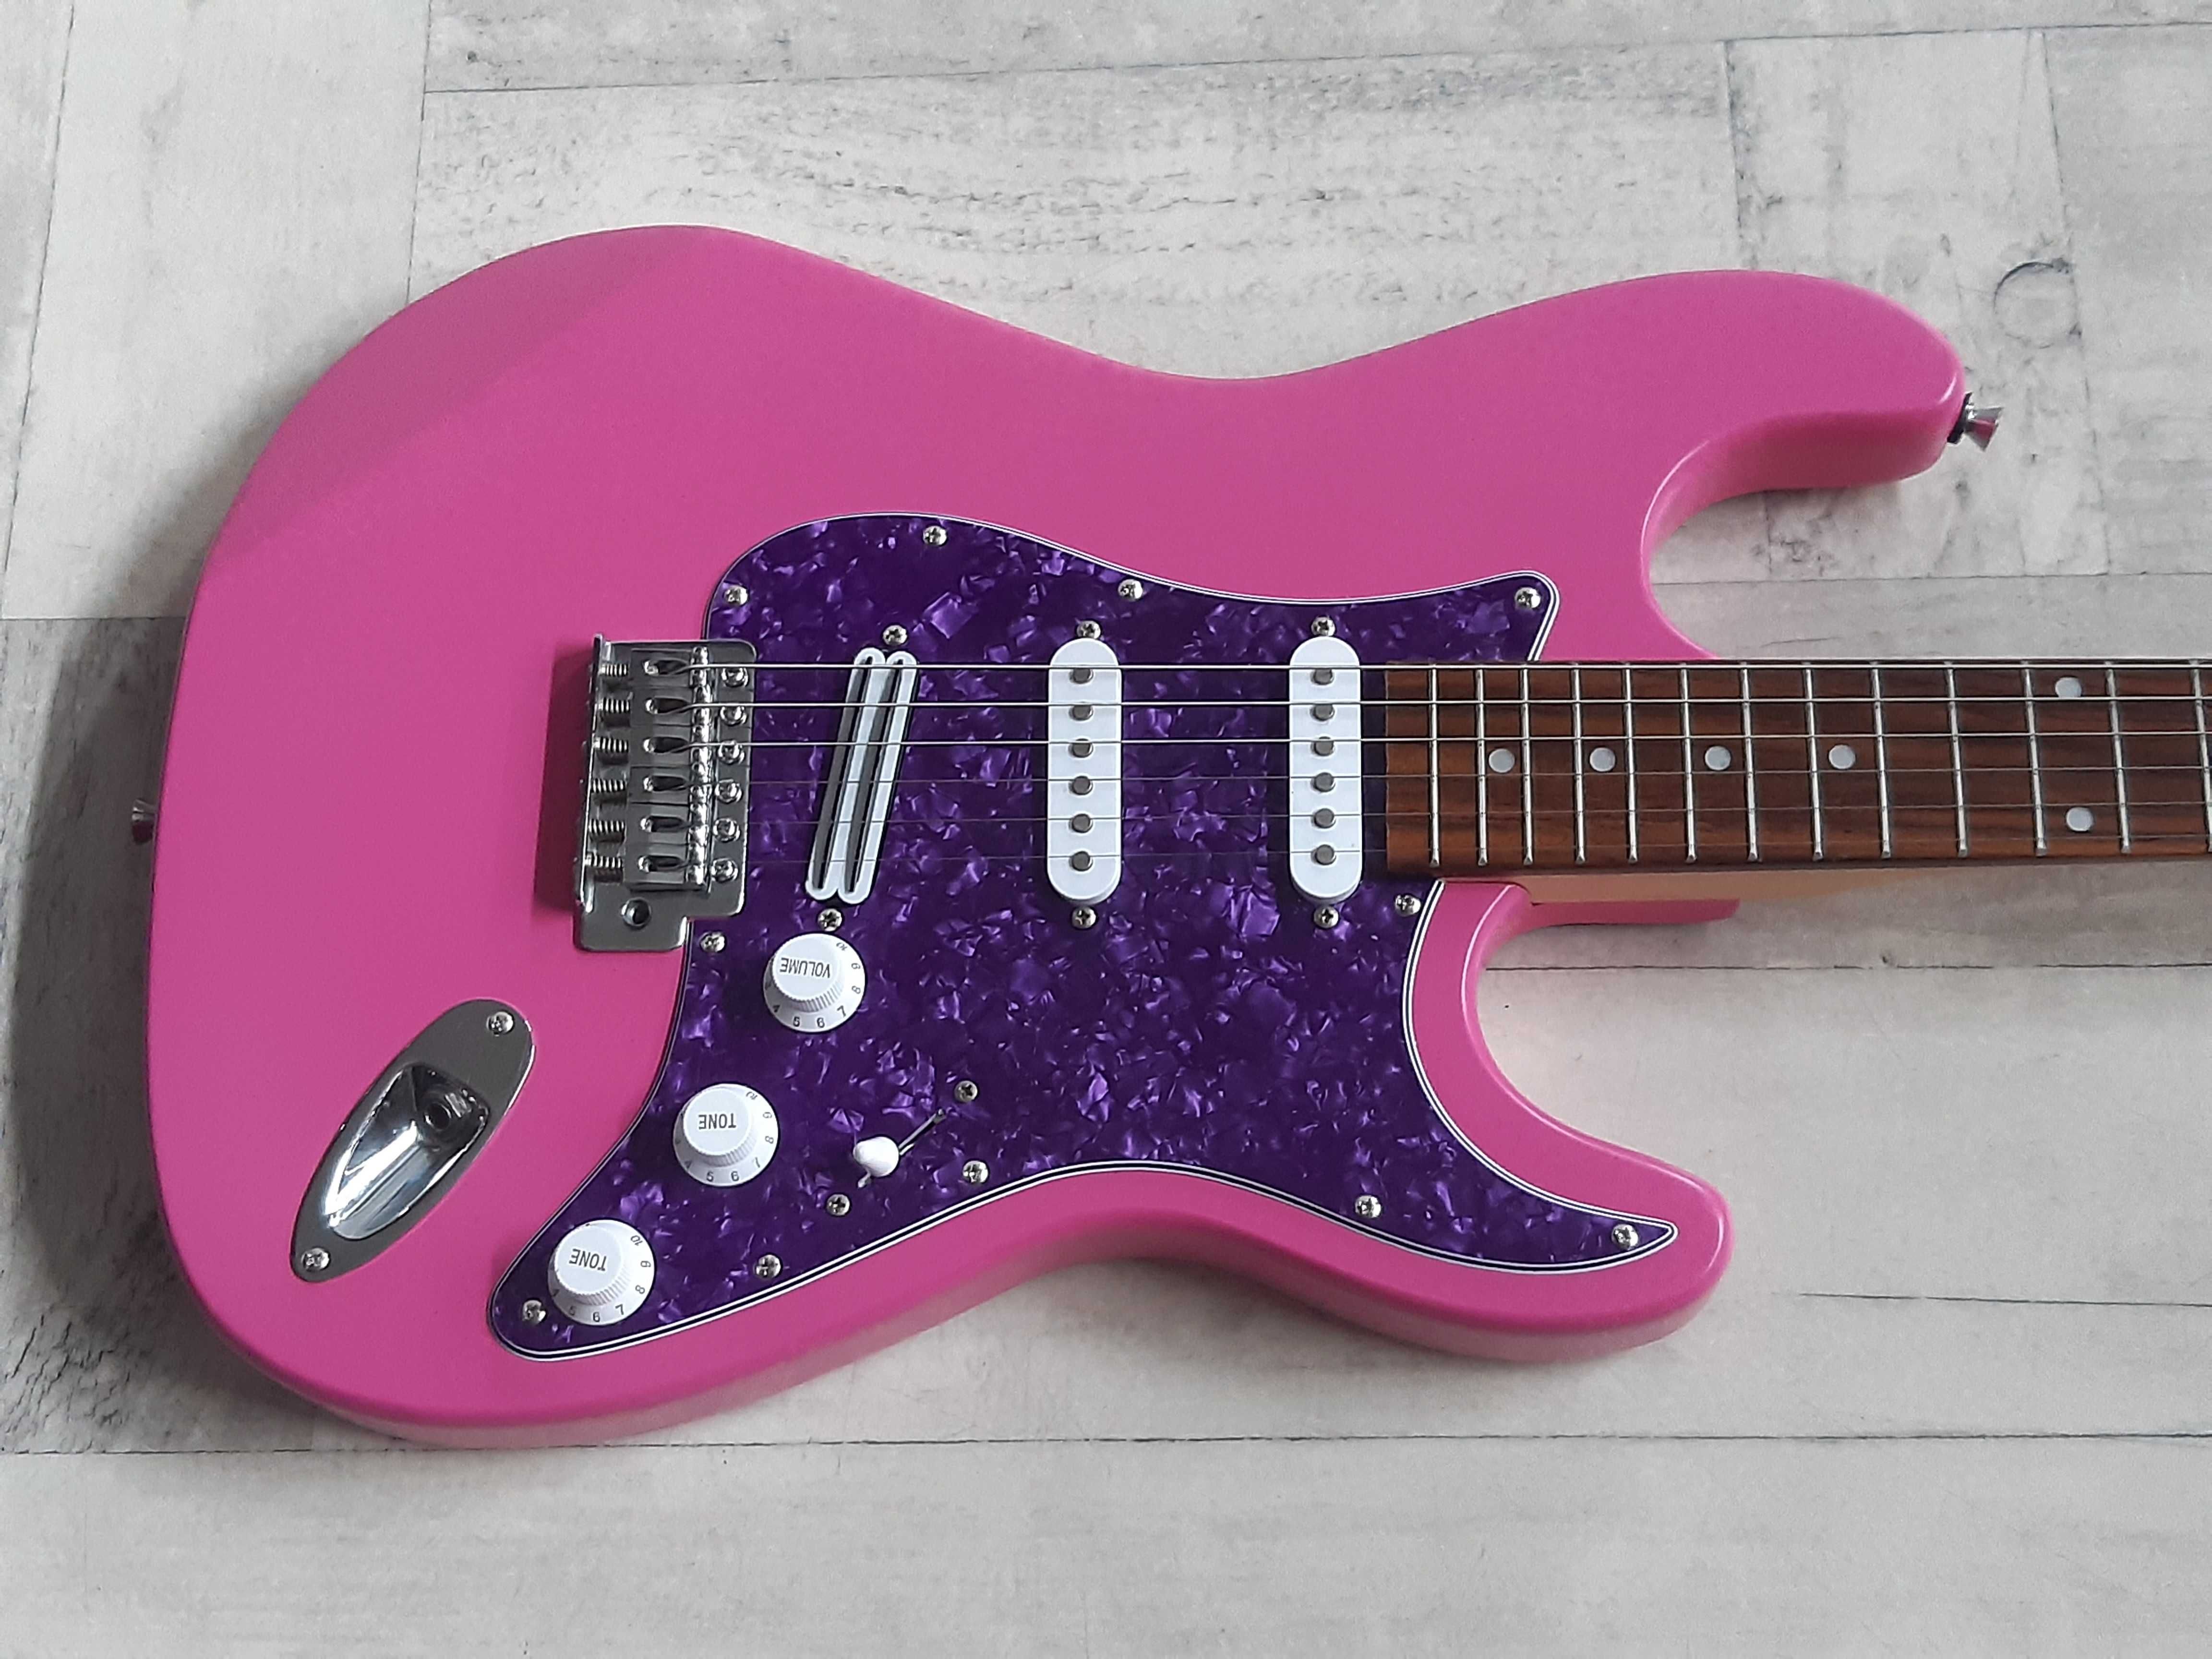 Piękna Gitara Stratocaster Pink Purple-HSS- wysyłka Gratis lub zamiana